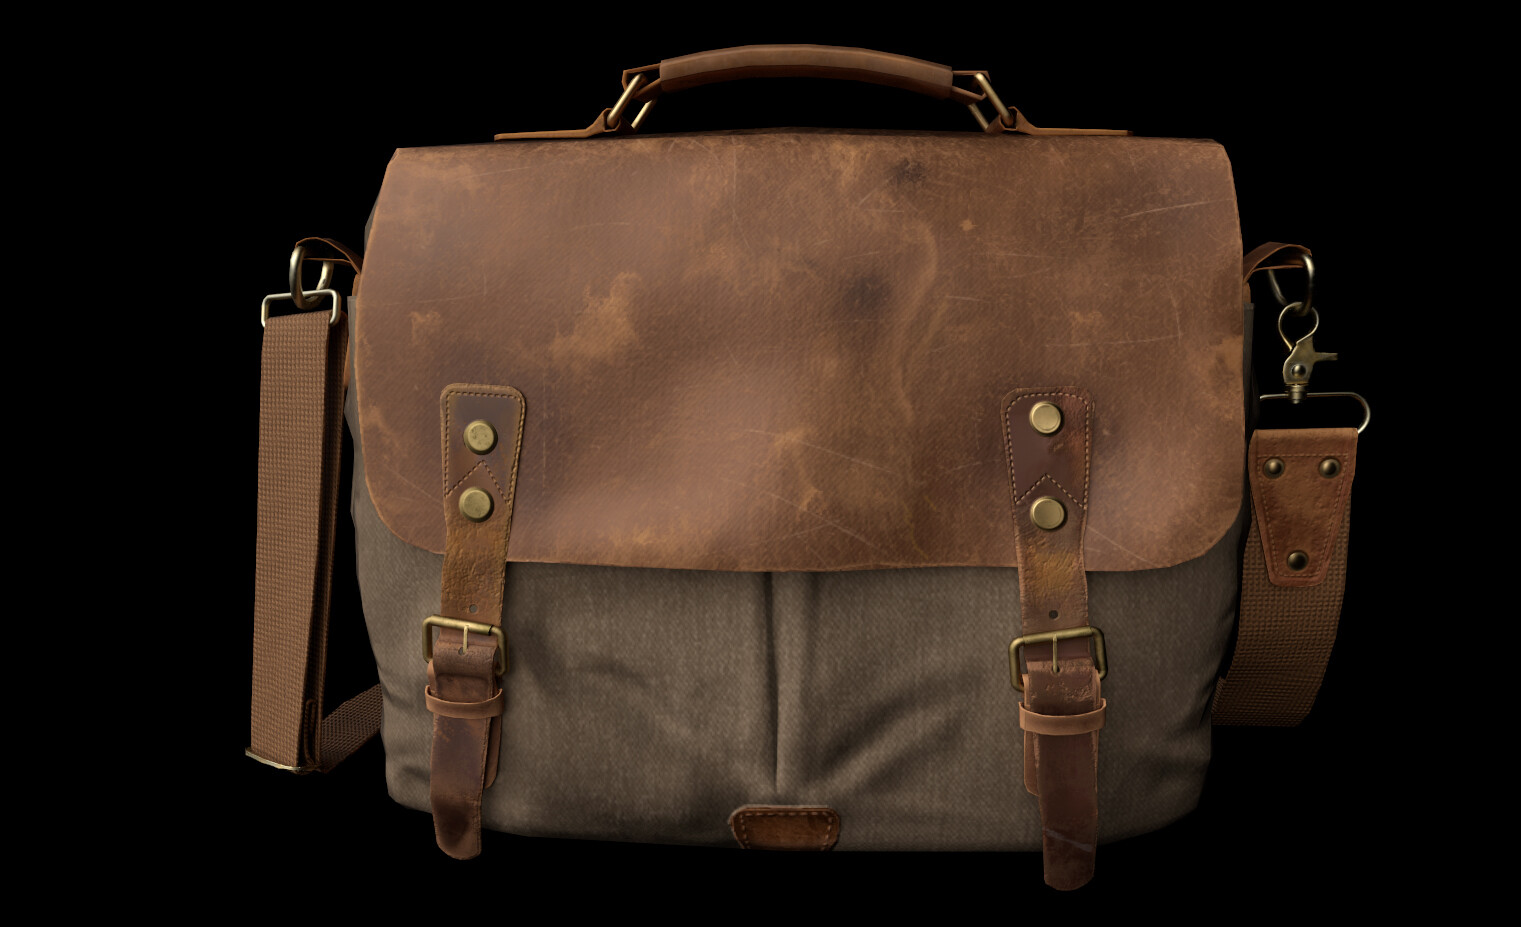 ArtStation - Vintage Style Canvas Leather Flap-over Messenger Bag with ...